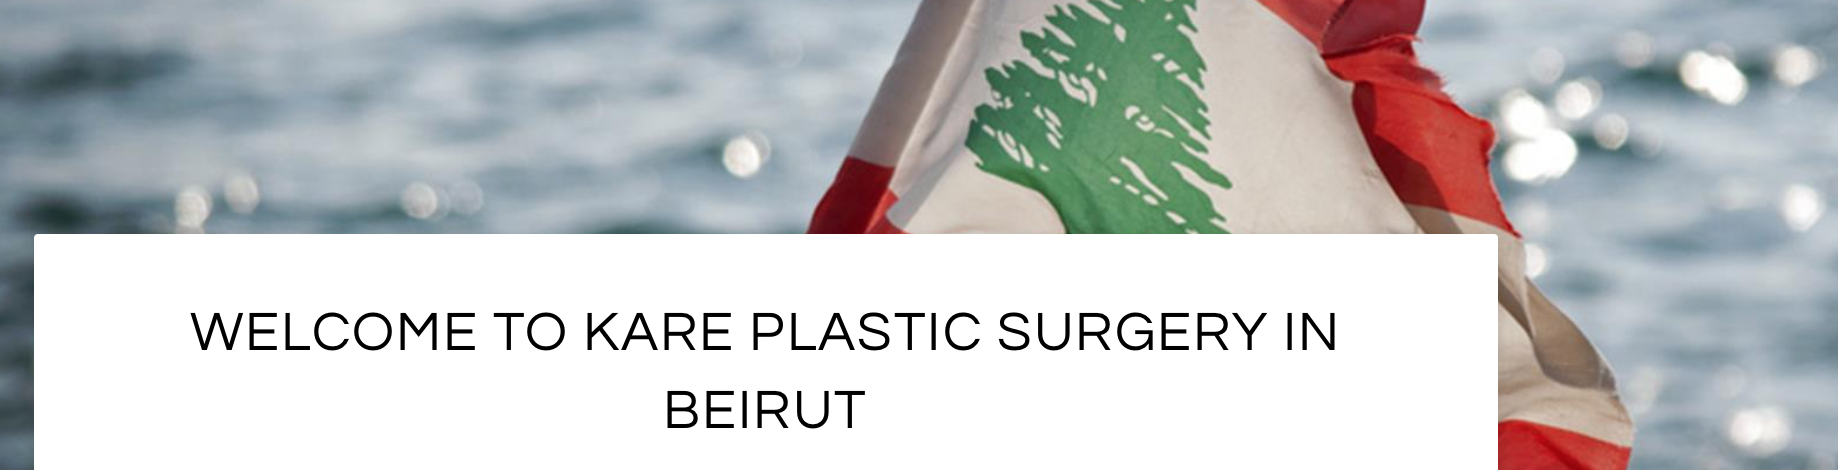 Beirut Plastic Surgeon AUB at Kare Plastic Surgery Beirut offers tummy tucks and liposuction